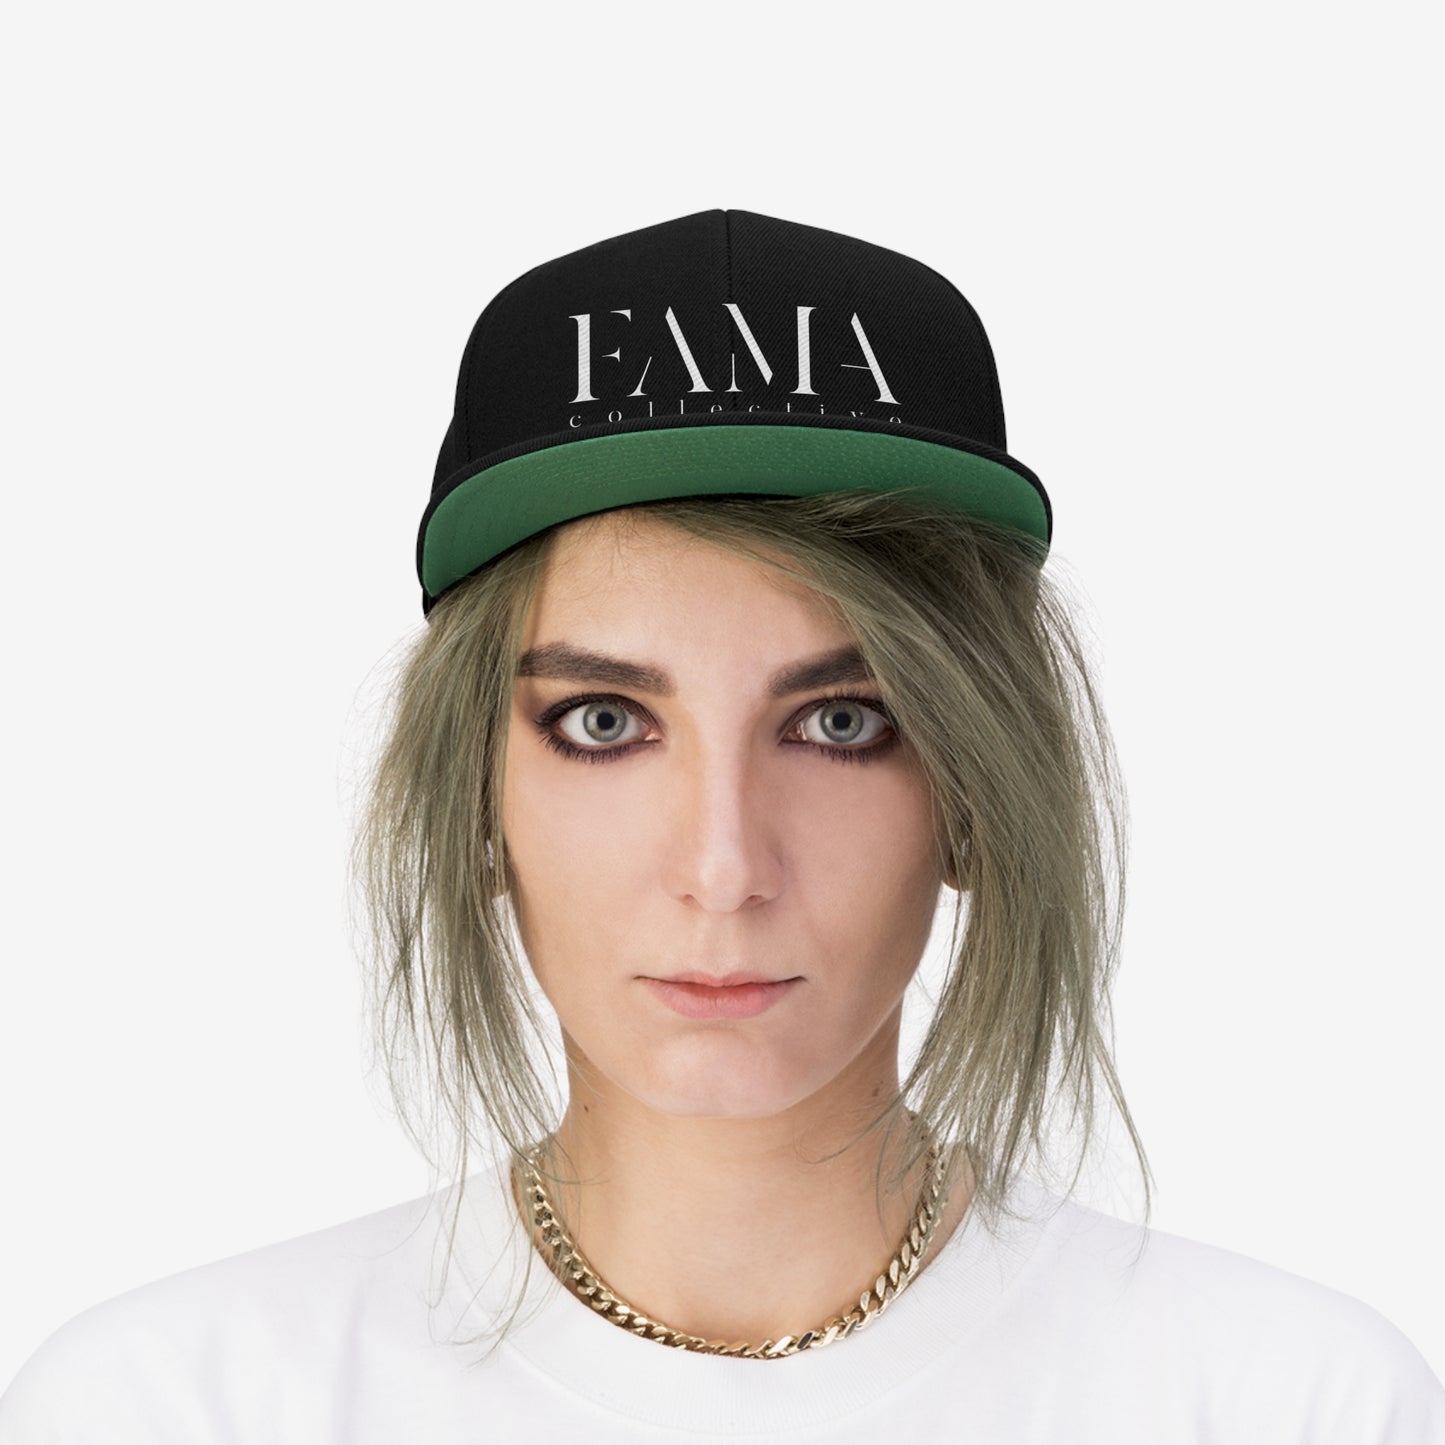 FAMA Collective Black Flat Hat